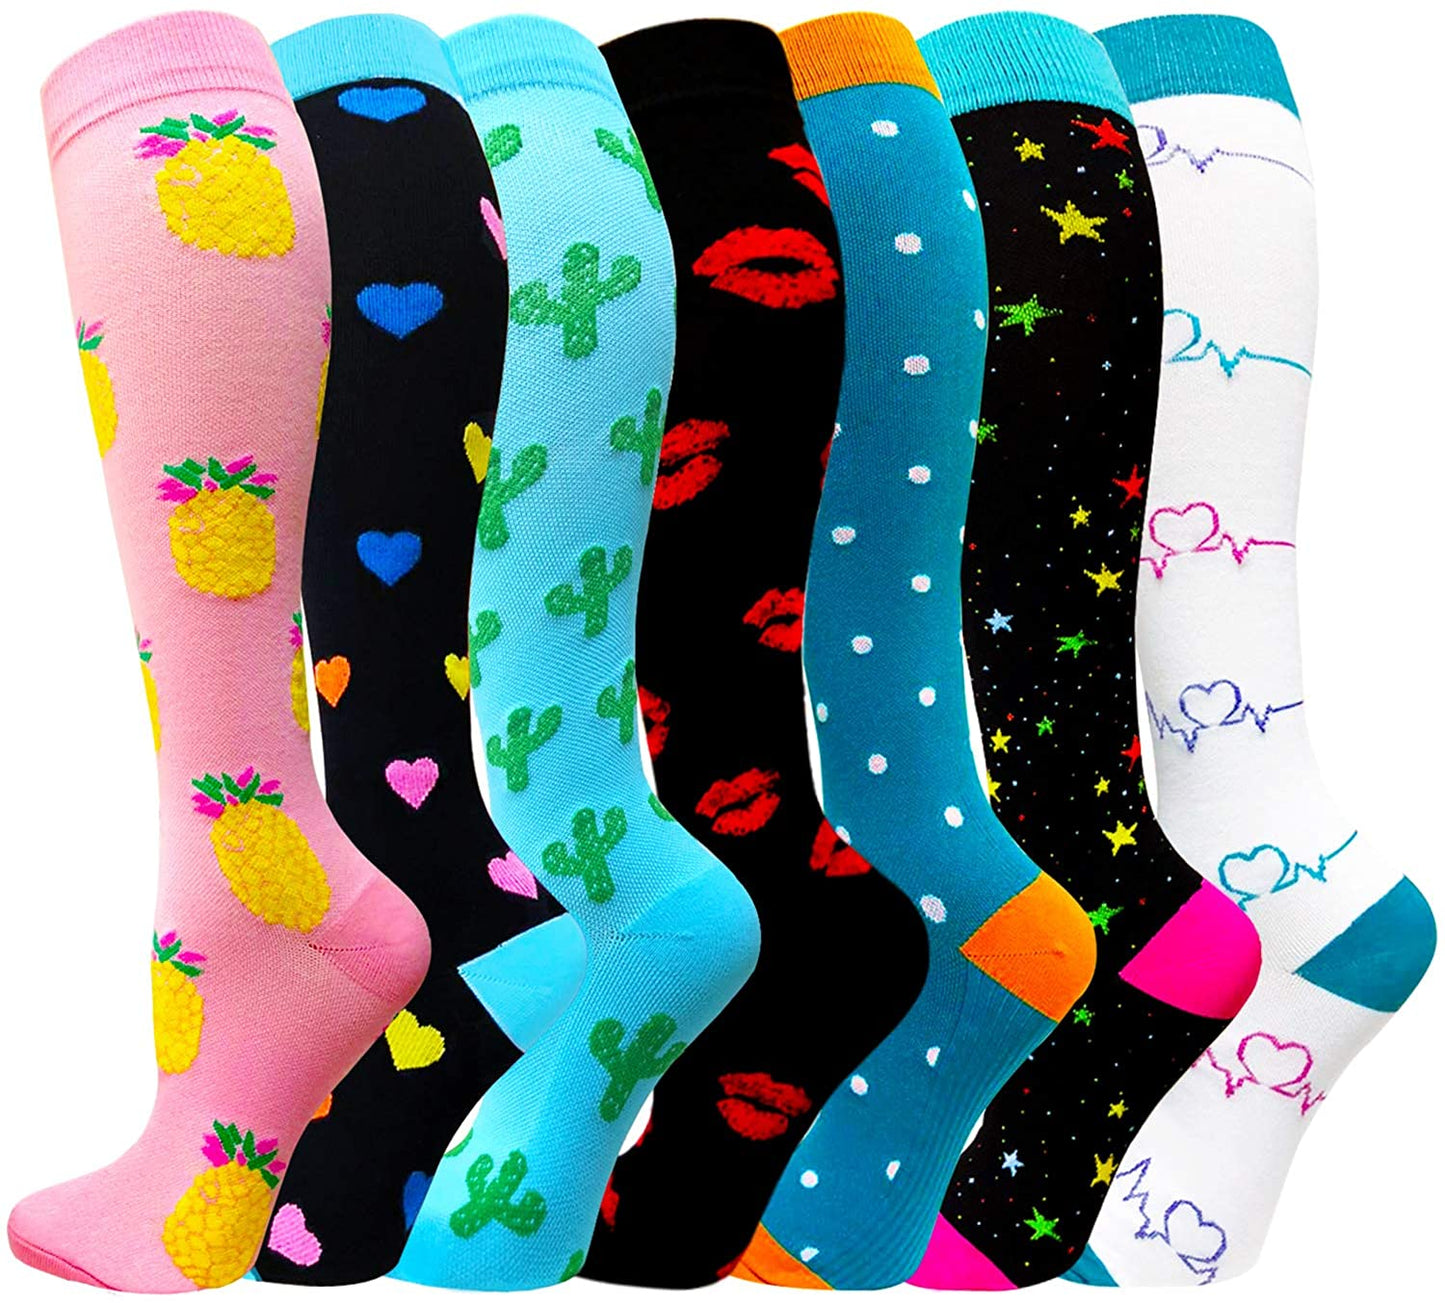 Premium Compression Socks - Random Colors